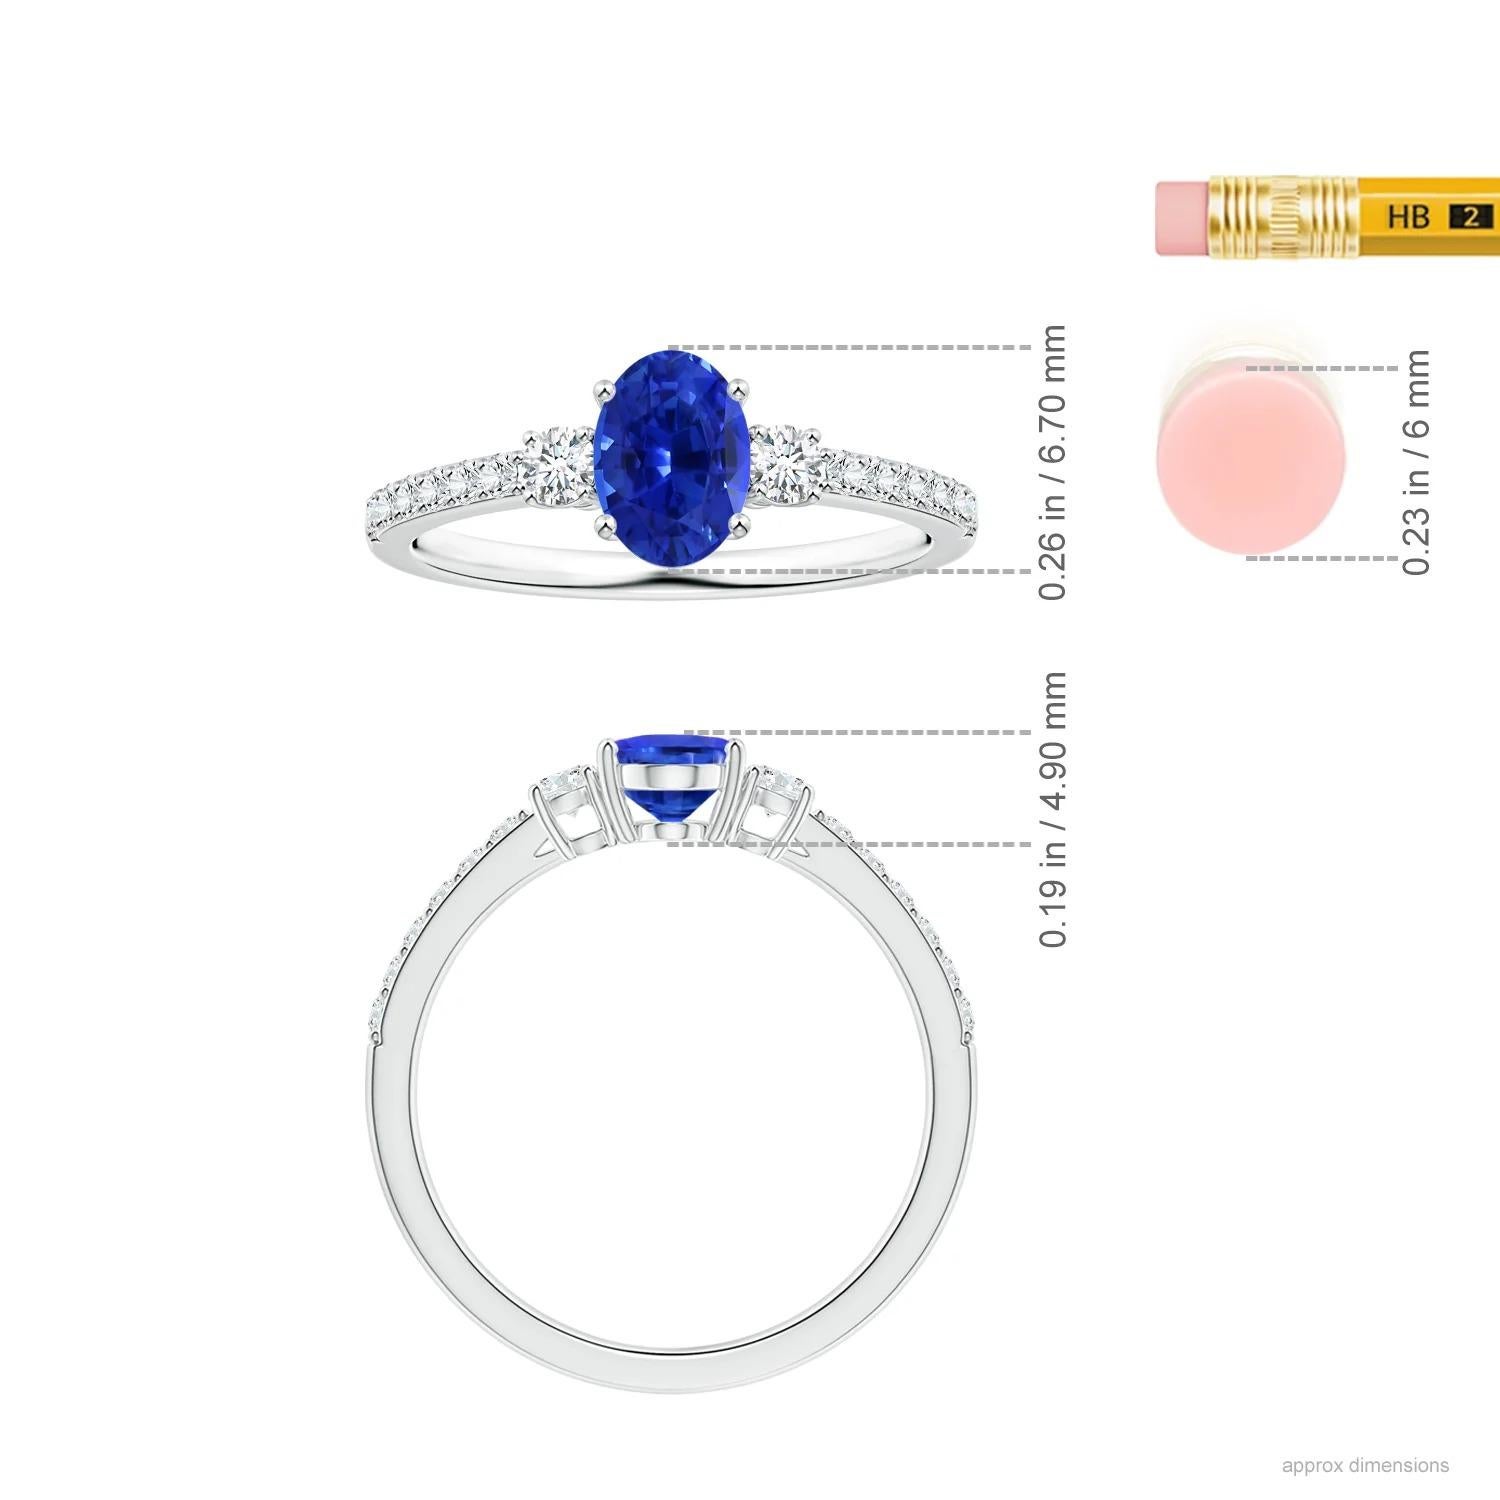 En vente :  Angara, bague en platine avec saphir bleu naturel à 3 pierres et diamants certifiés GIA 5